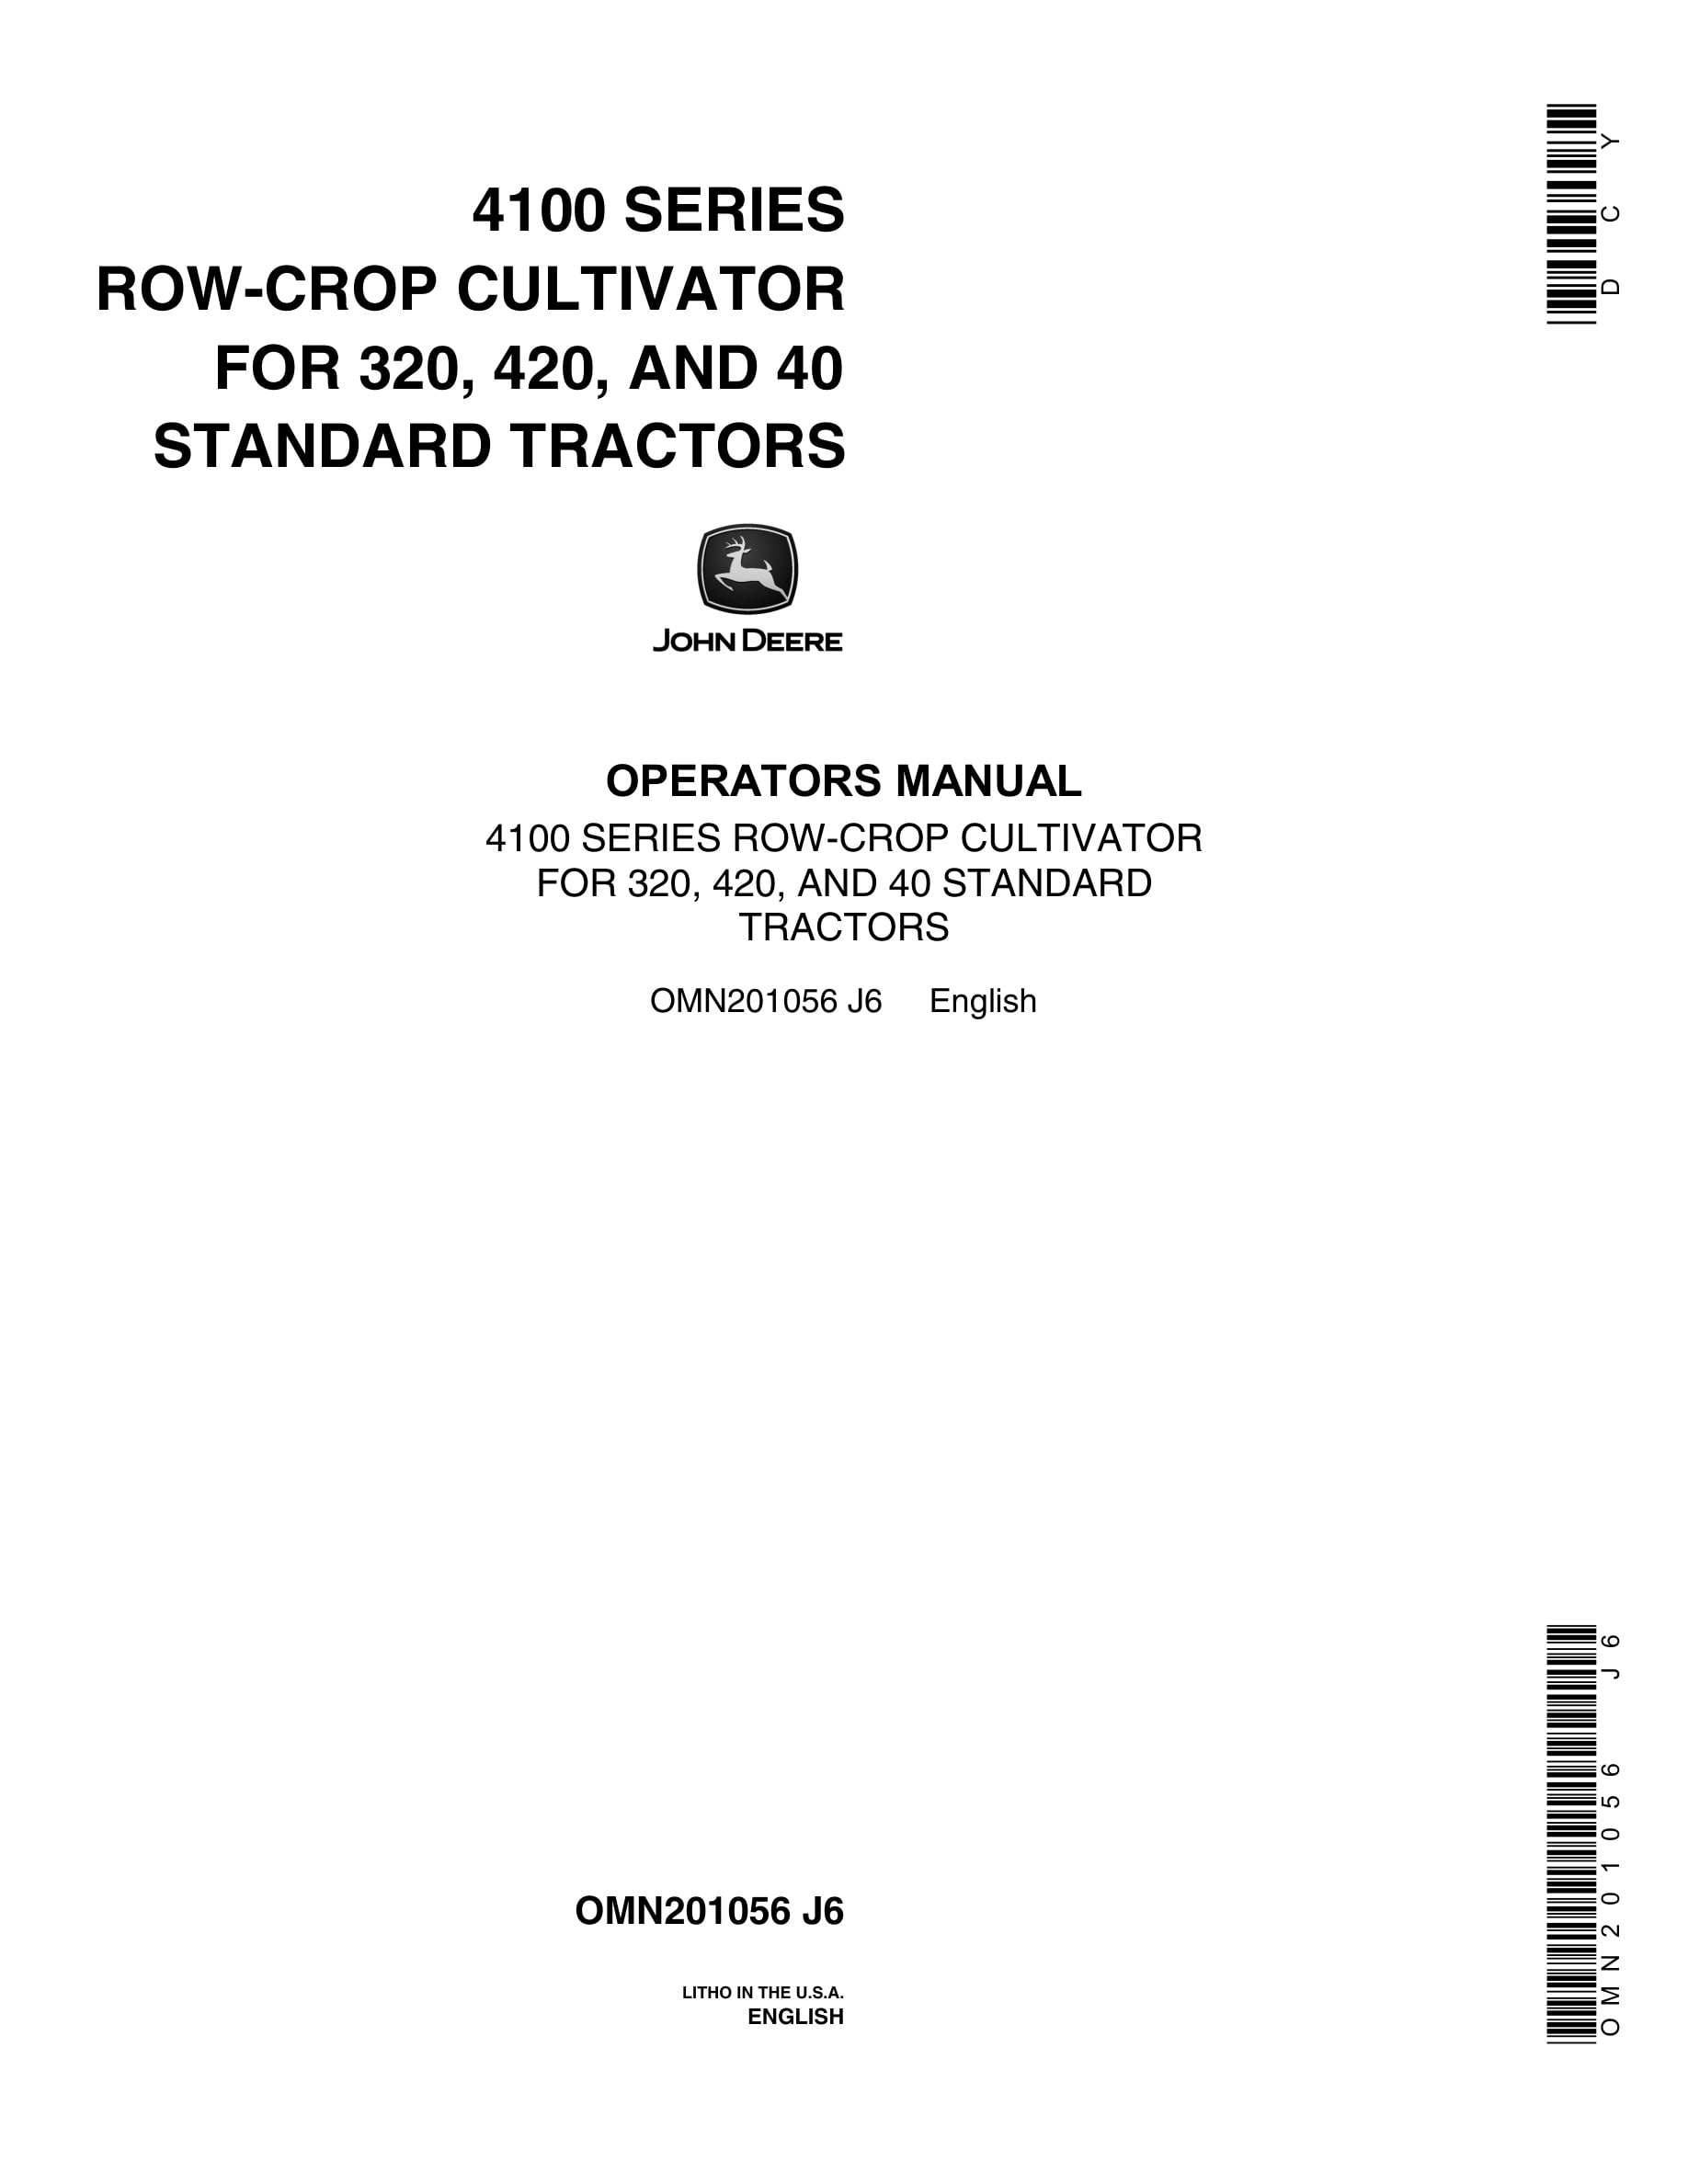 John Deere 4100 SERIES ROW-CROP CULTIVATOR FOR 320, 420, AND 40 STANDARD TRACTORS Operator Manual OMN201056-1